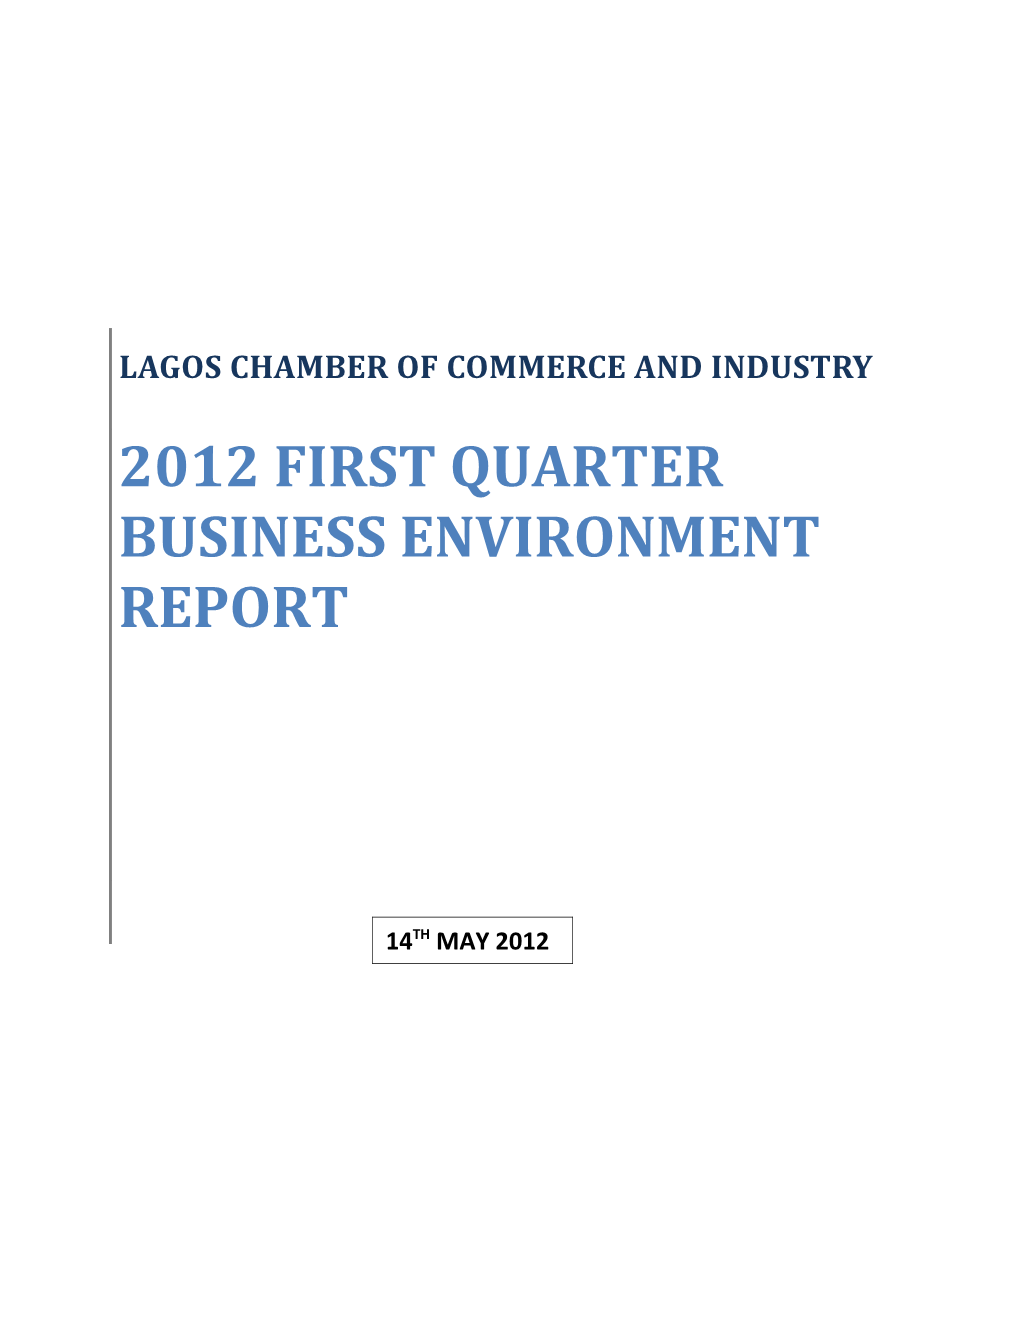 2012 First Quarter Business Environment Report